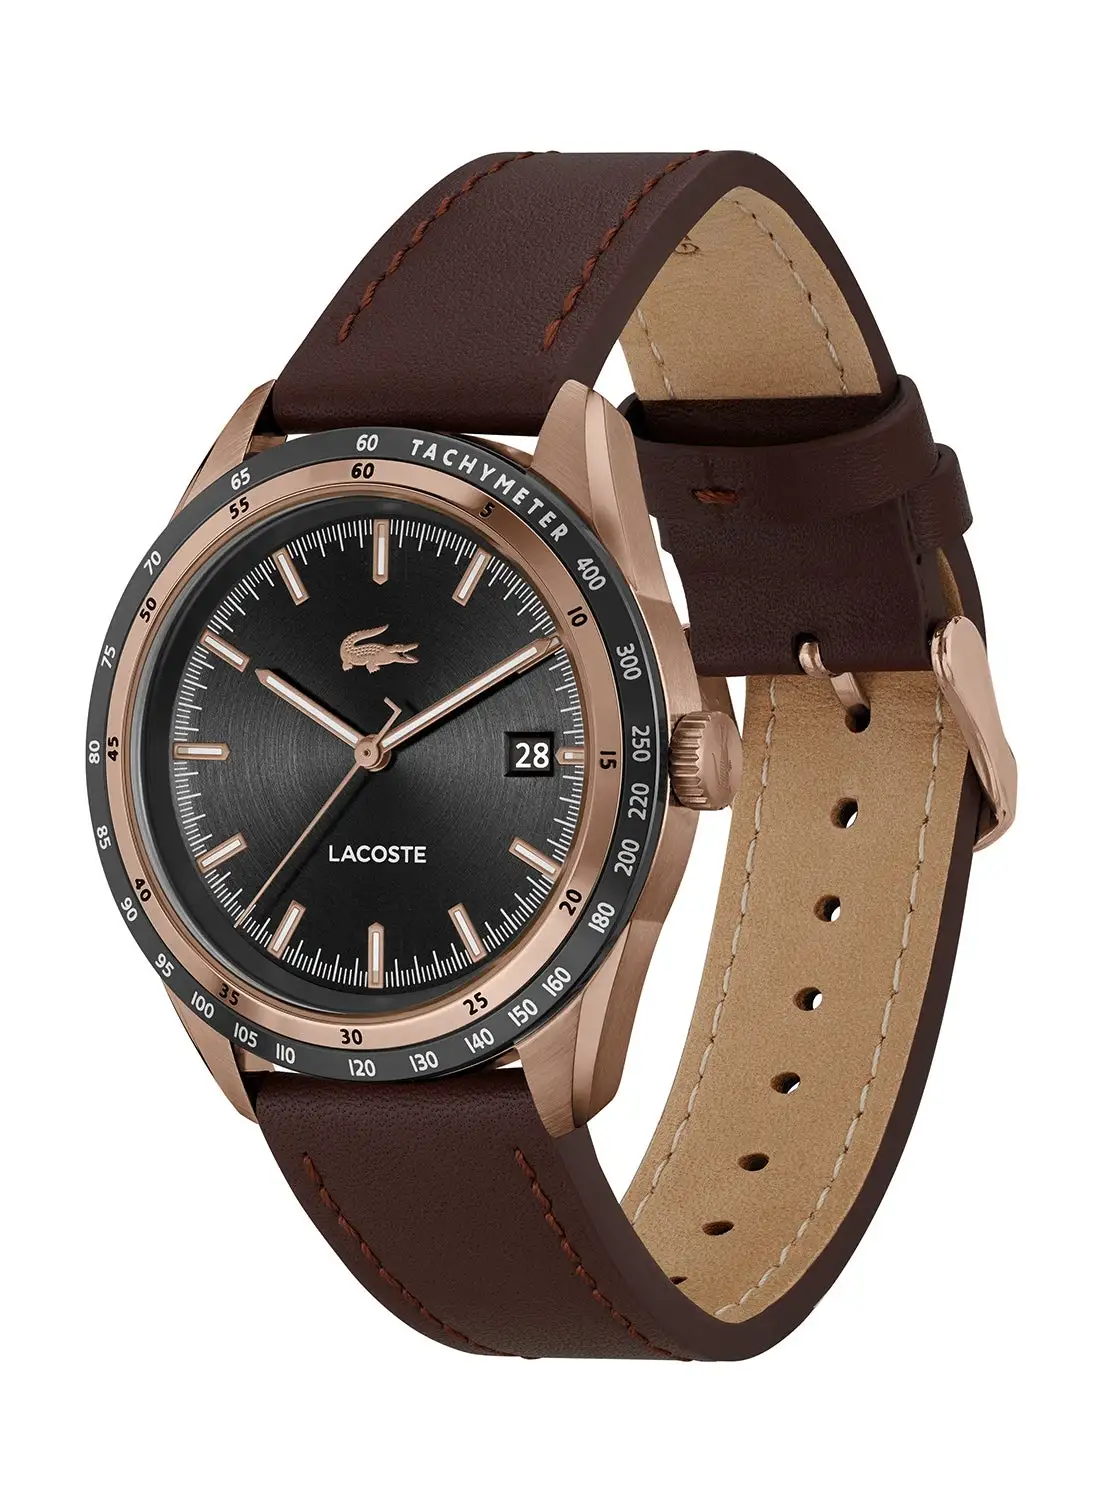 LACOSTE Men's Analog Round Shape Leather Wrist Watch 2011293 - 40 Mm